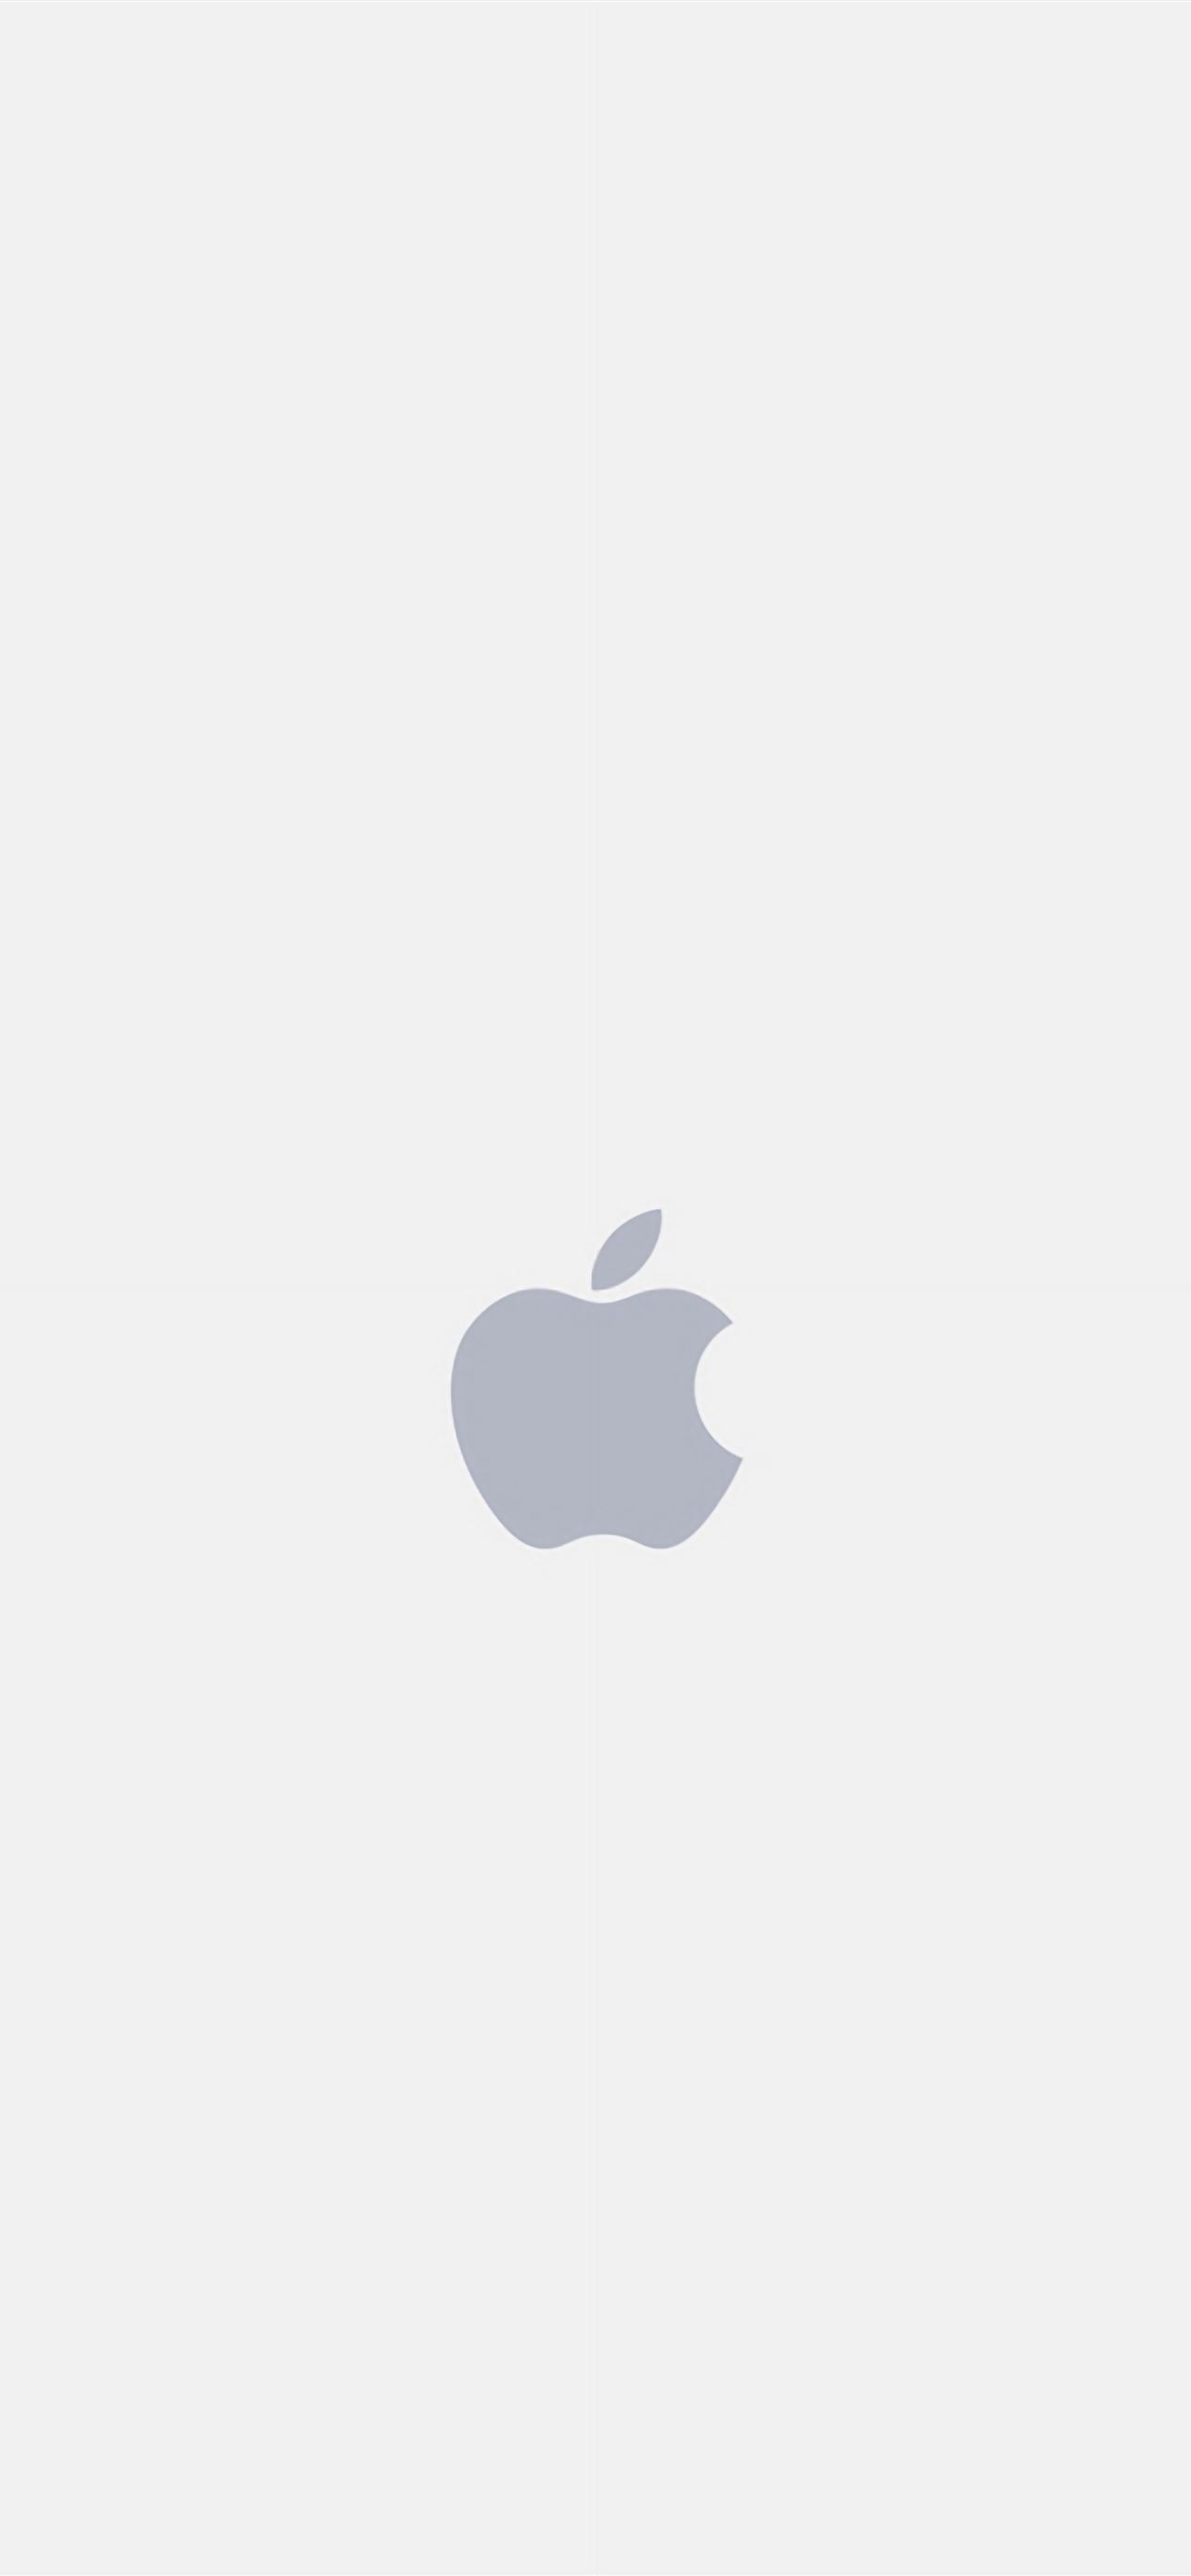 Apple Logo White Art Illustration iPhone Wallpapers Free Download